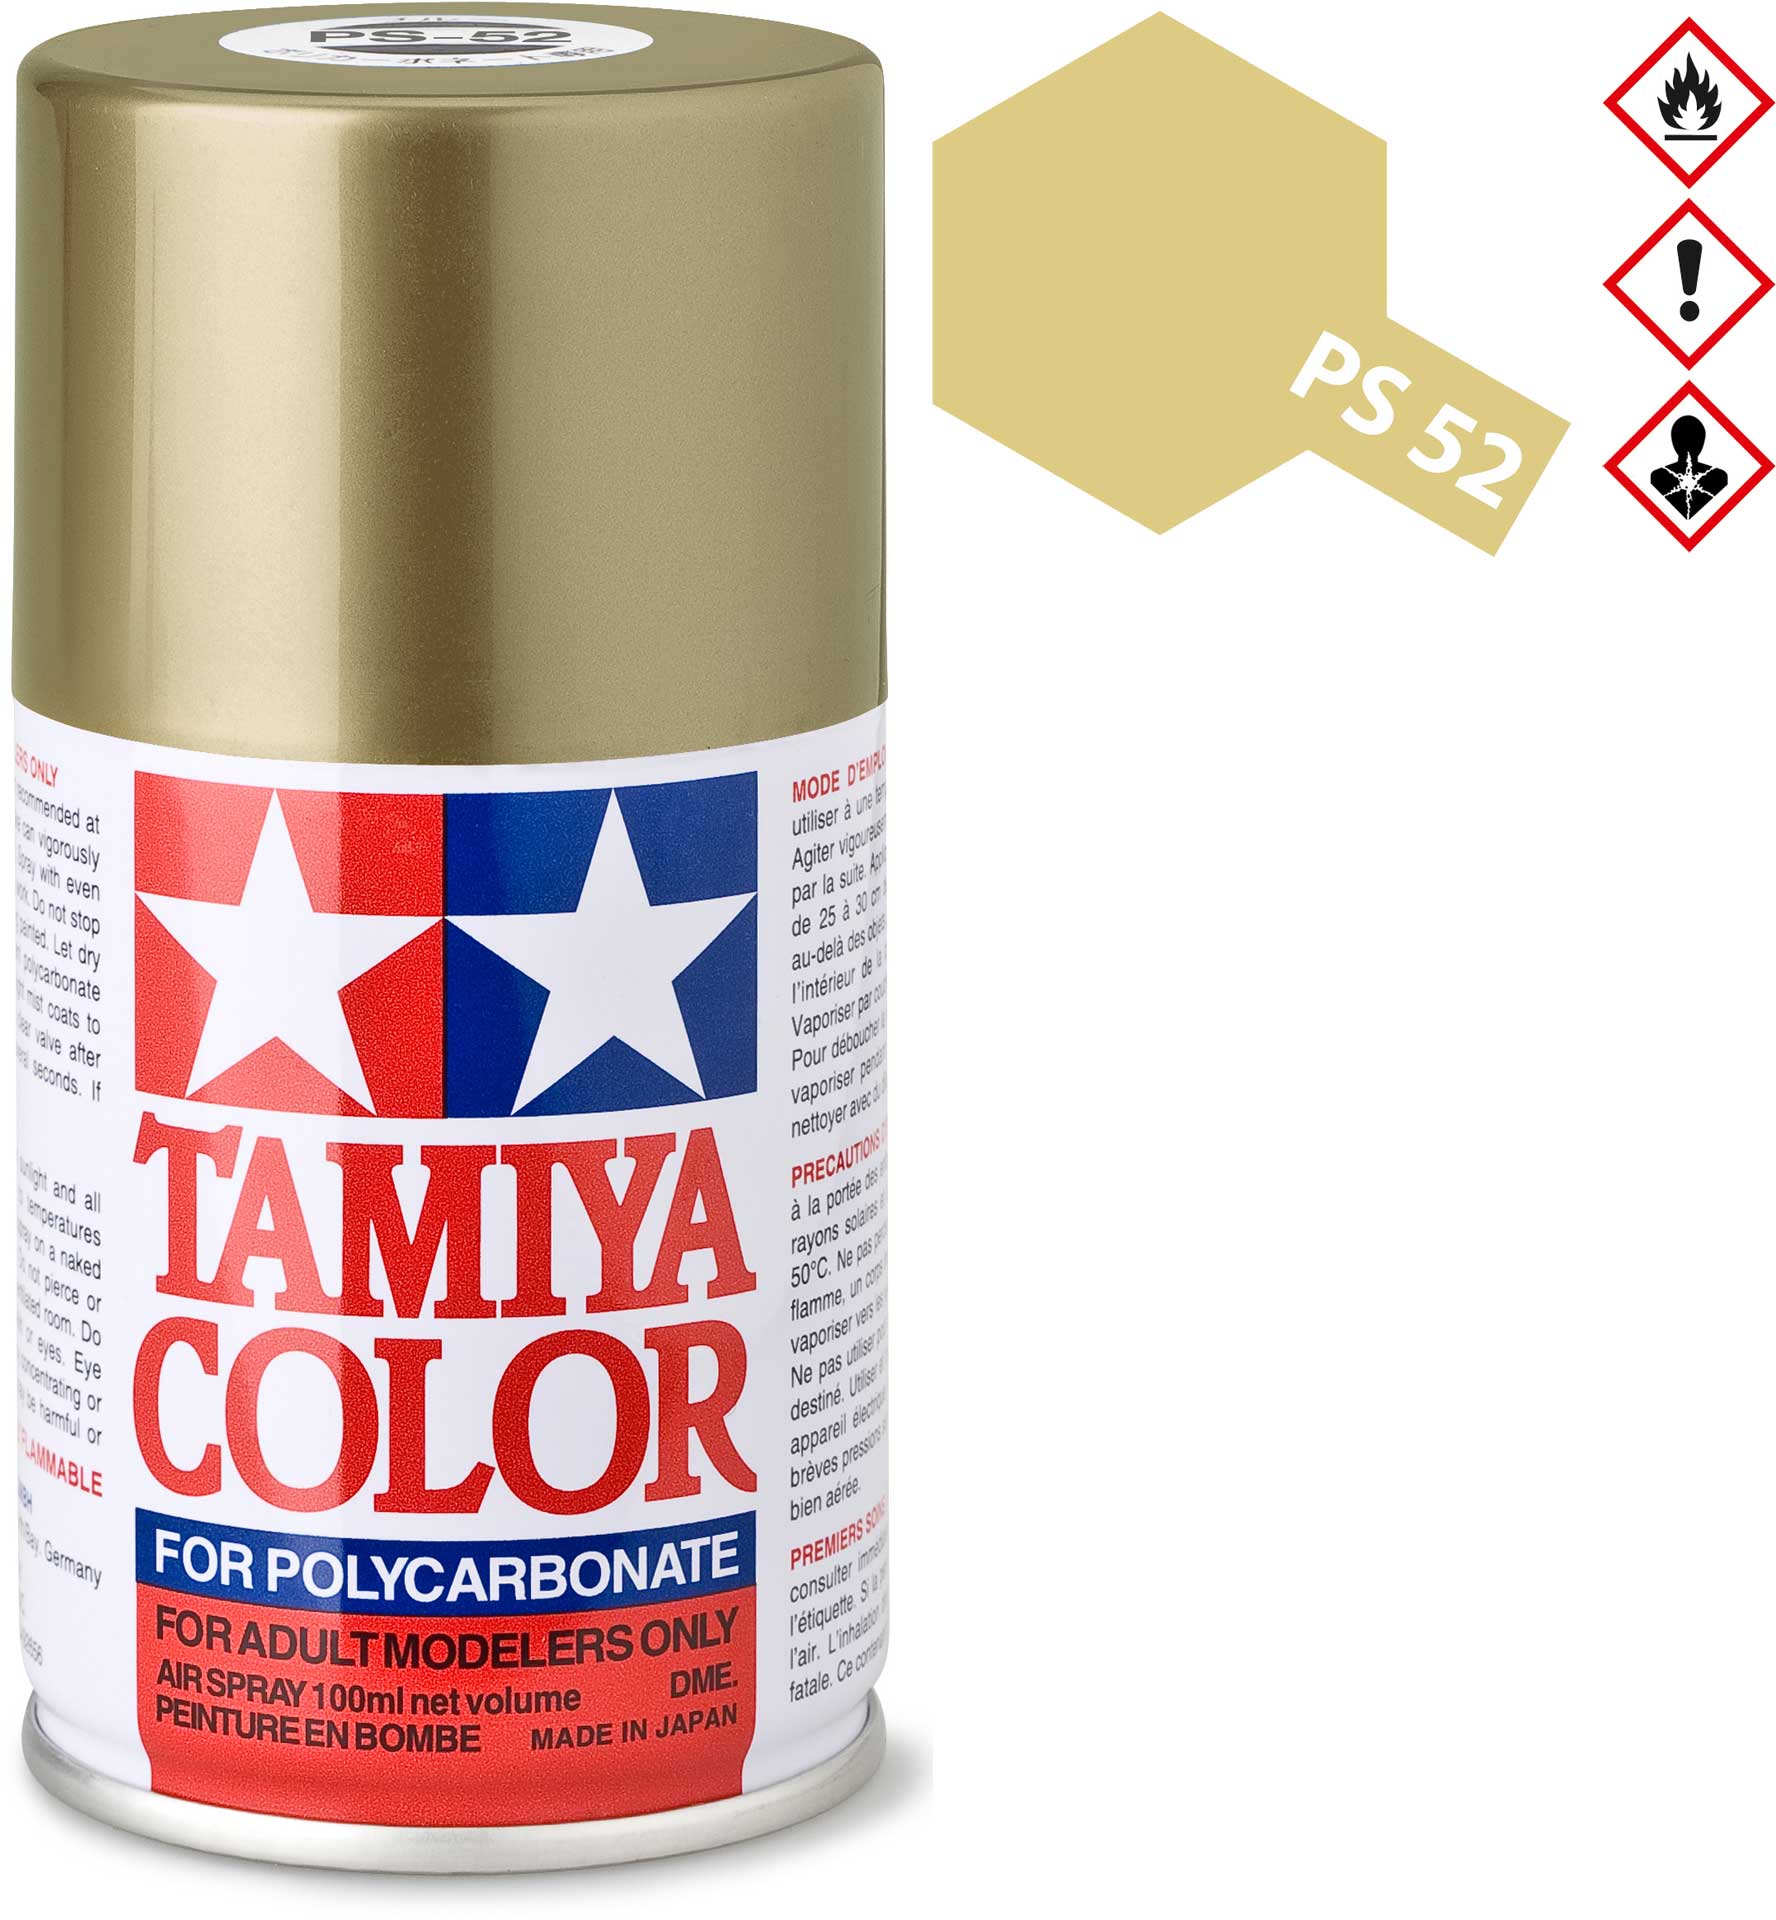 TAMIYA PS-52 Champagner Gold Polycarbonat Spray 100ml